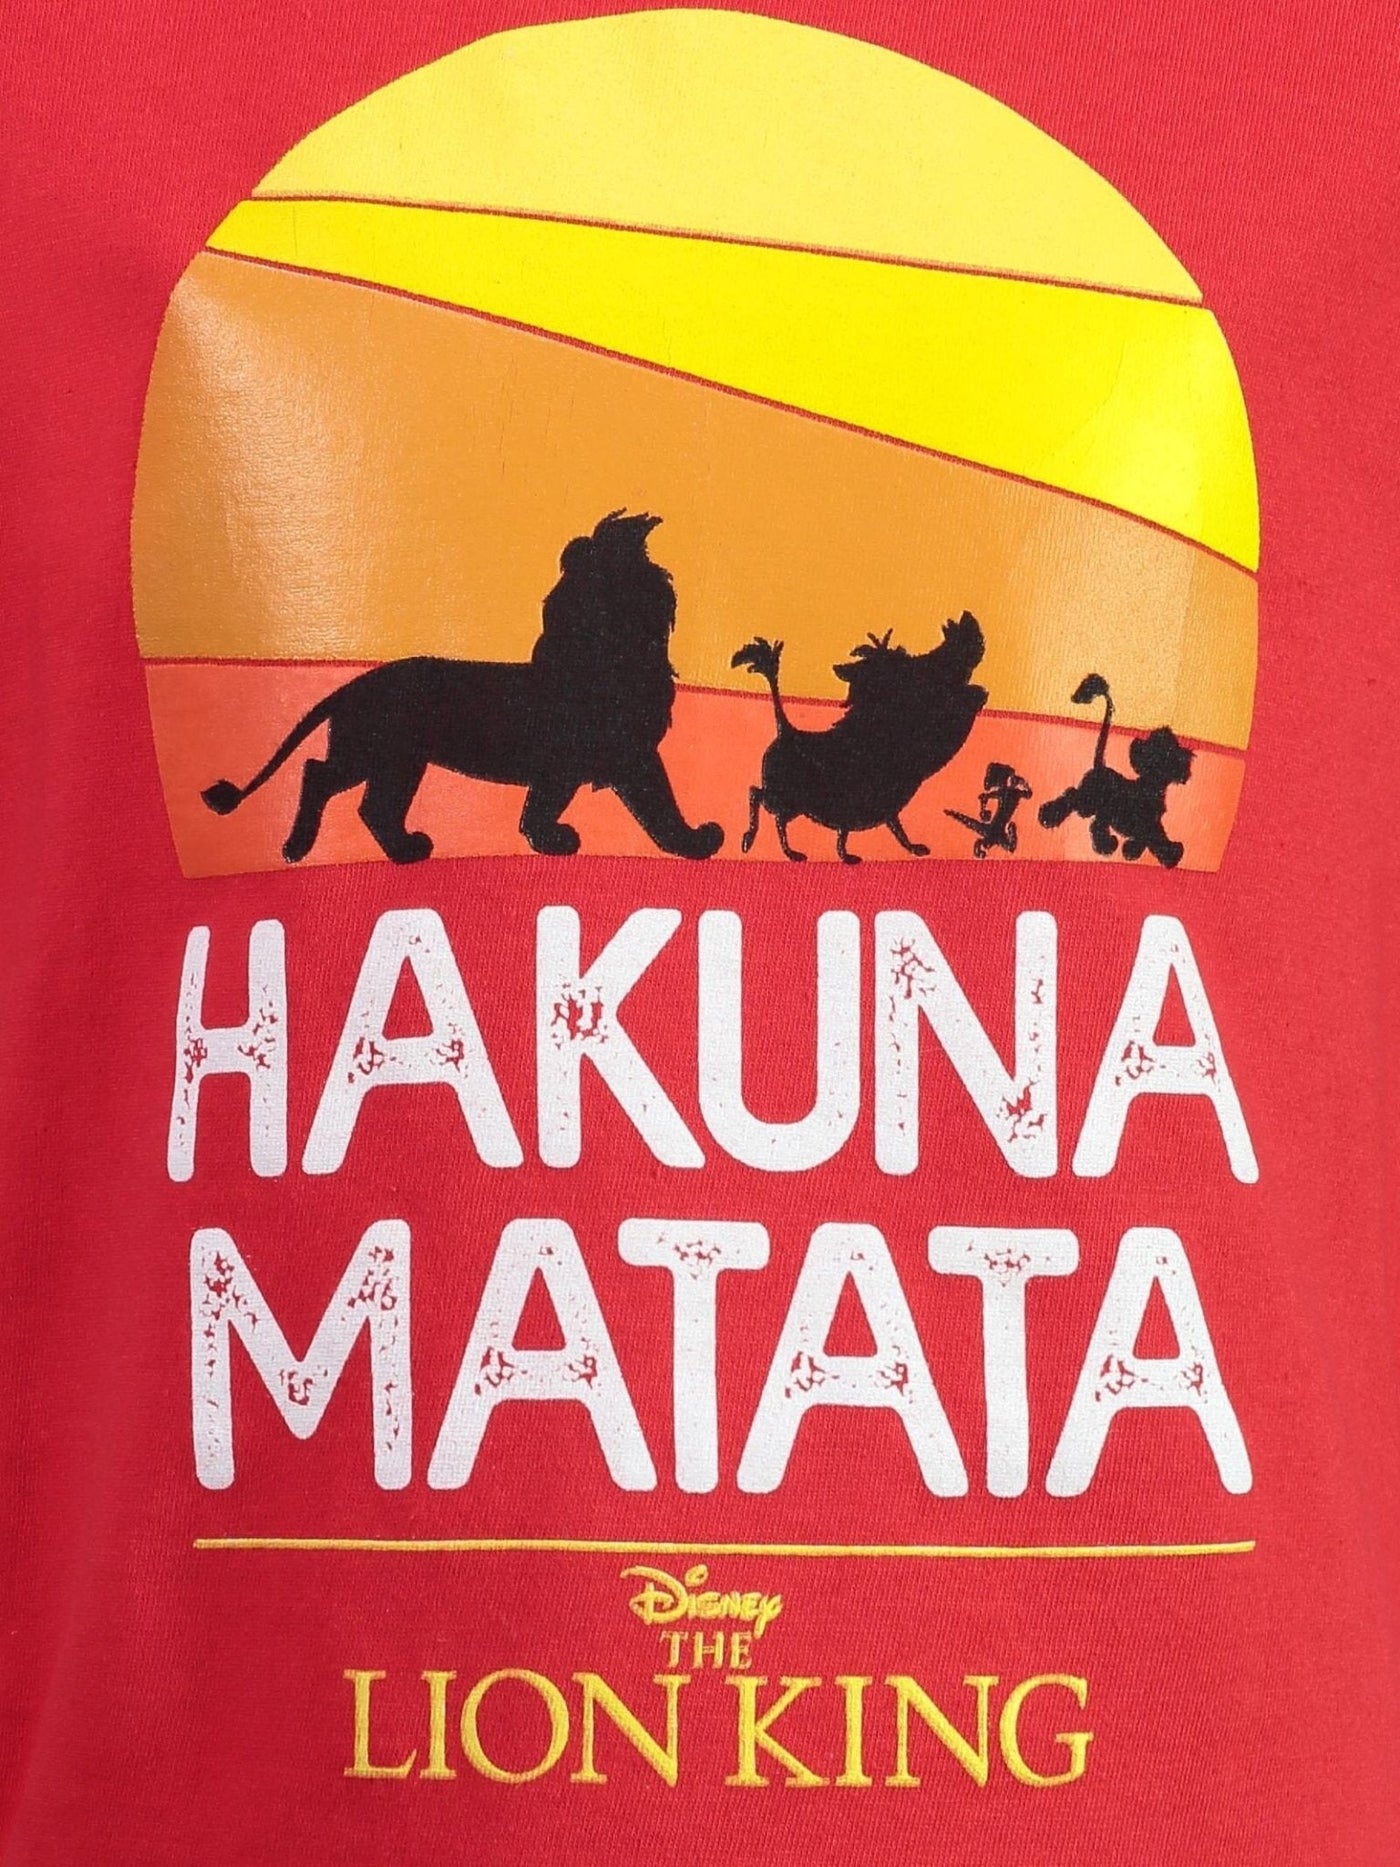 Disney Lion King 4 Pack T-Shirts - imagikids